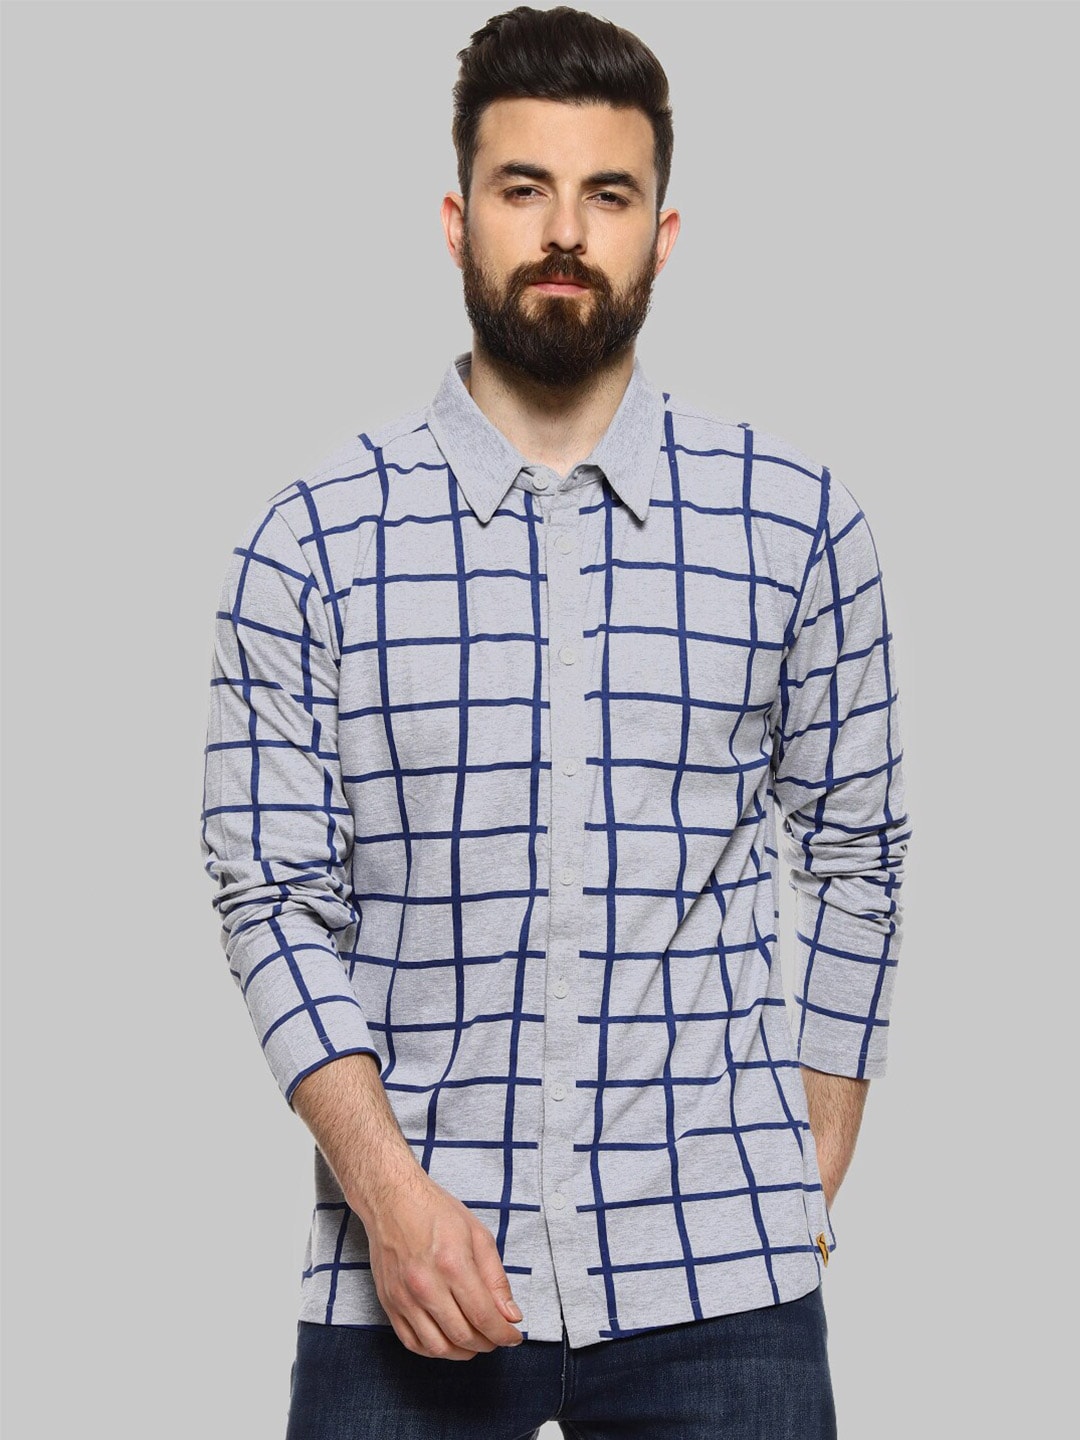 Campus Sutra Grey Windowpane Checks Classic Fit Cotton Casual Shirt